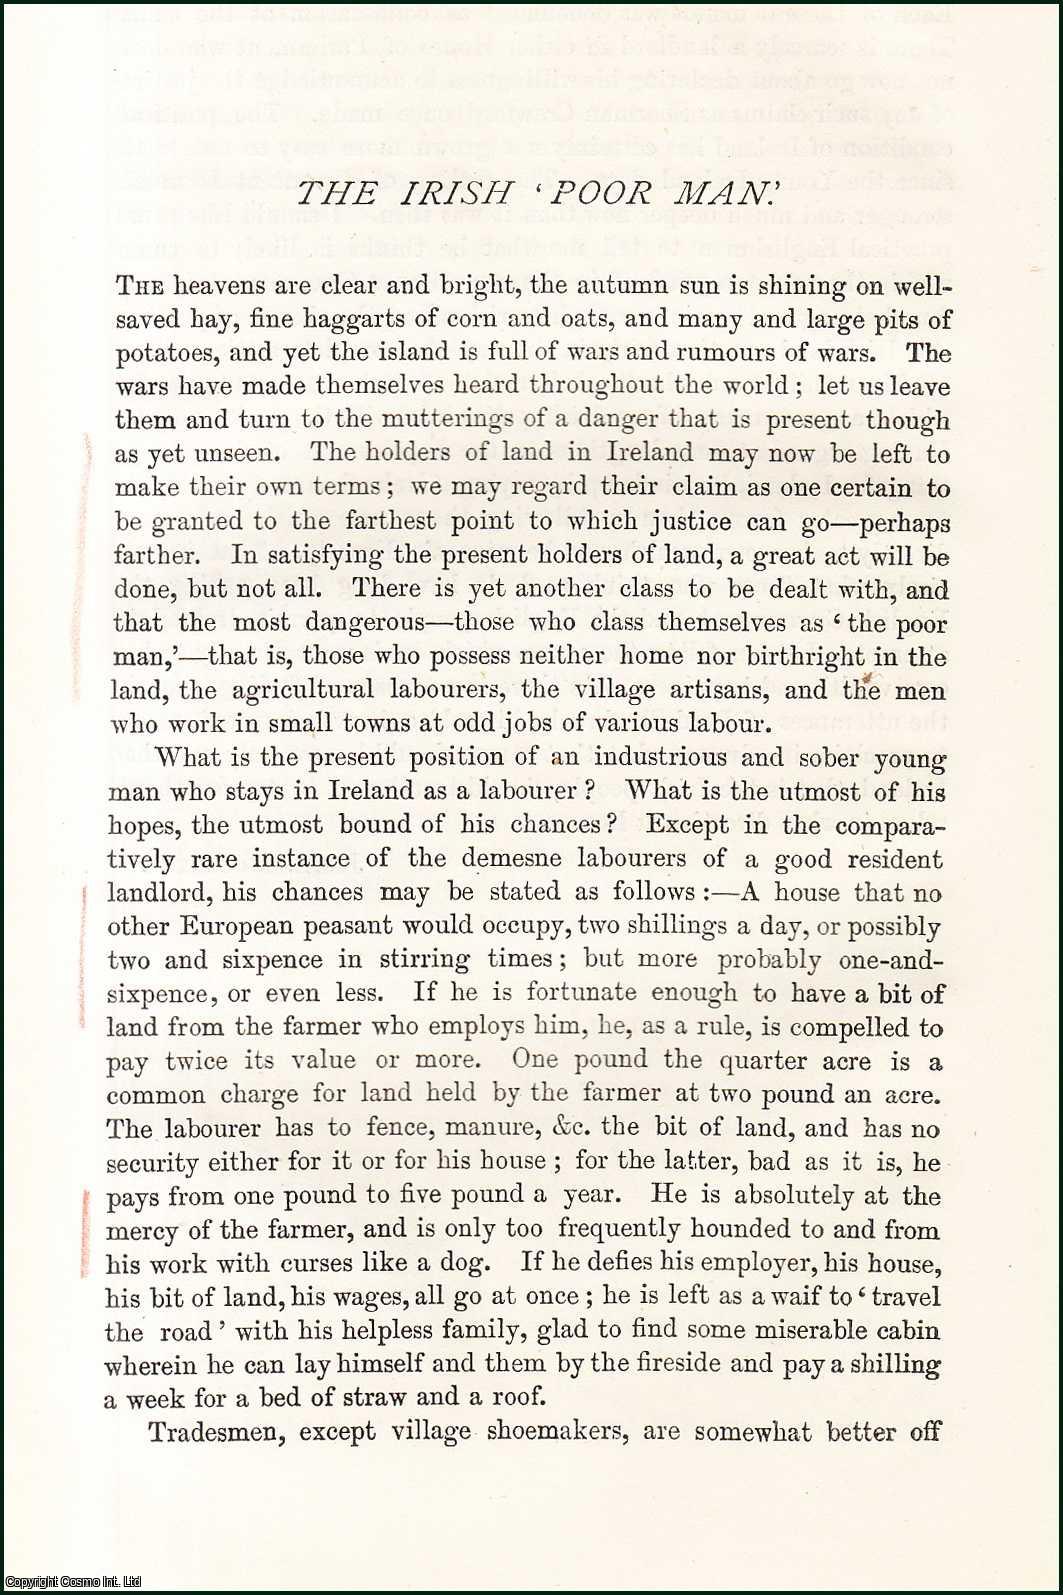 Charlotte G. O'Brien - The Irish Poor Man. An original article from the Nineteenth Century Magazine, 1880.